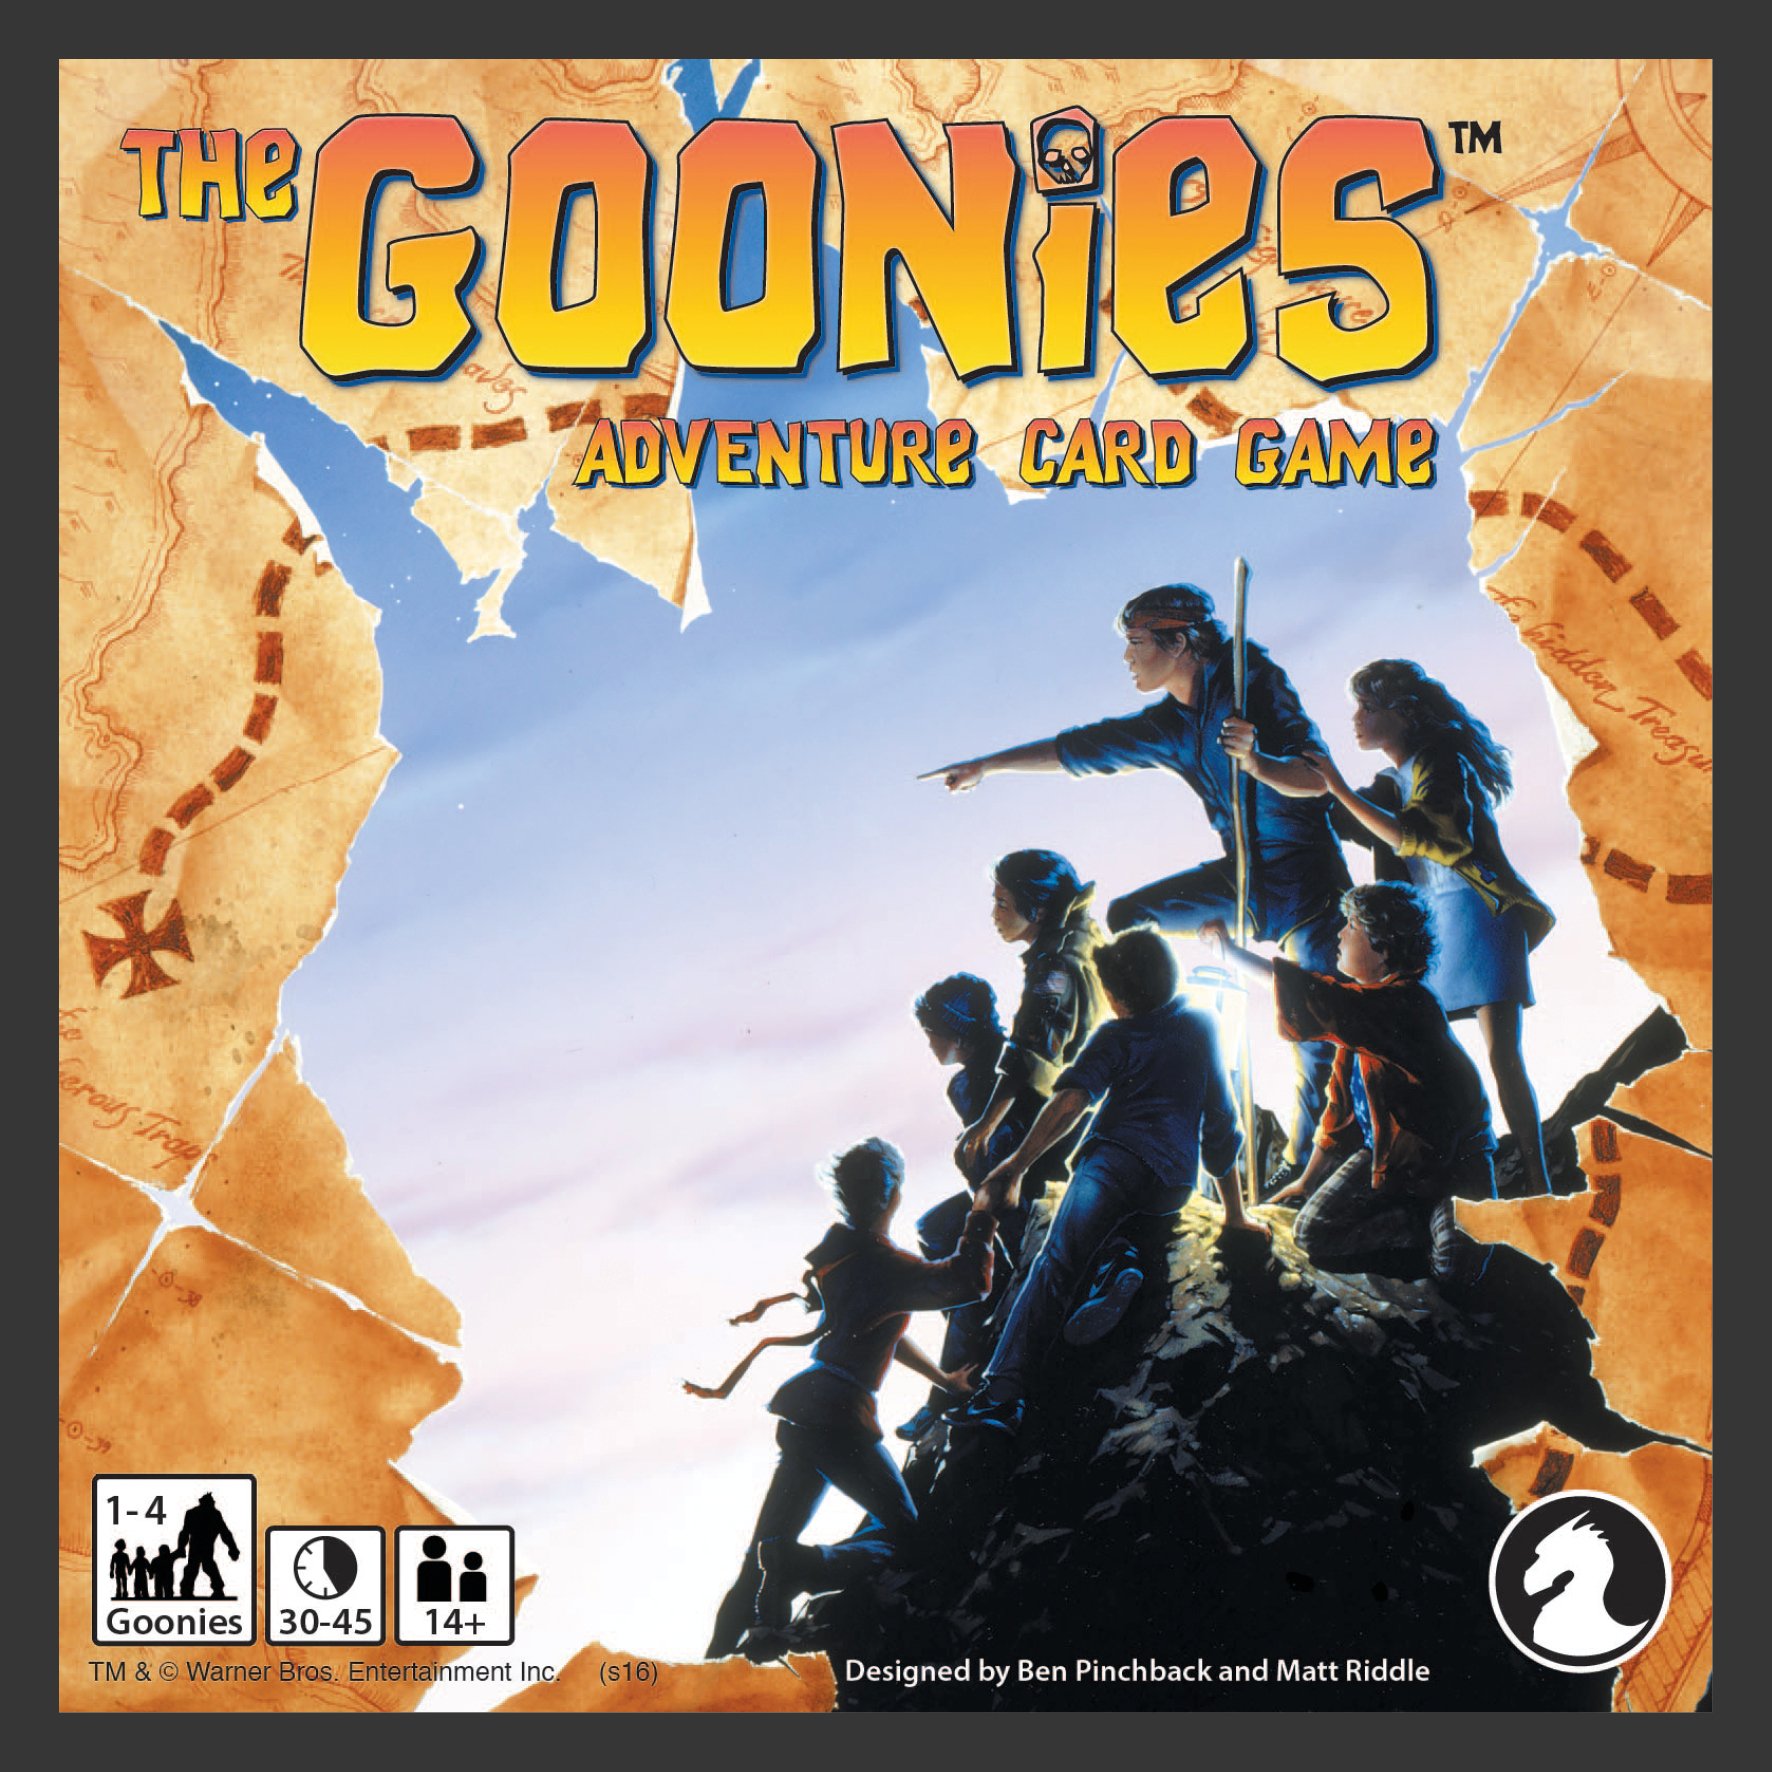 THE GOONIES: Adventure Card Game